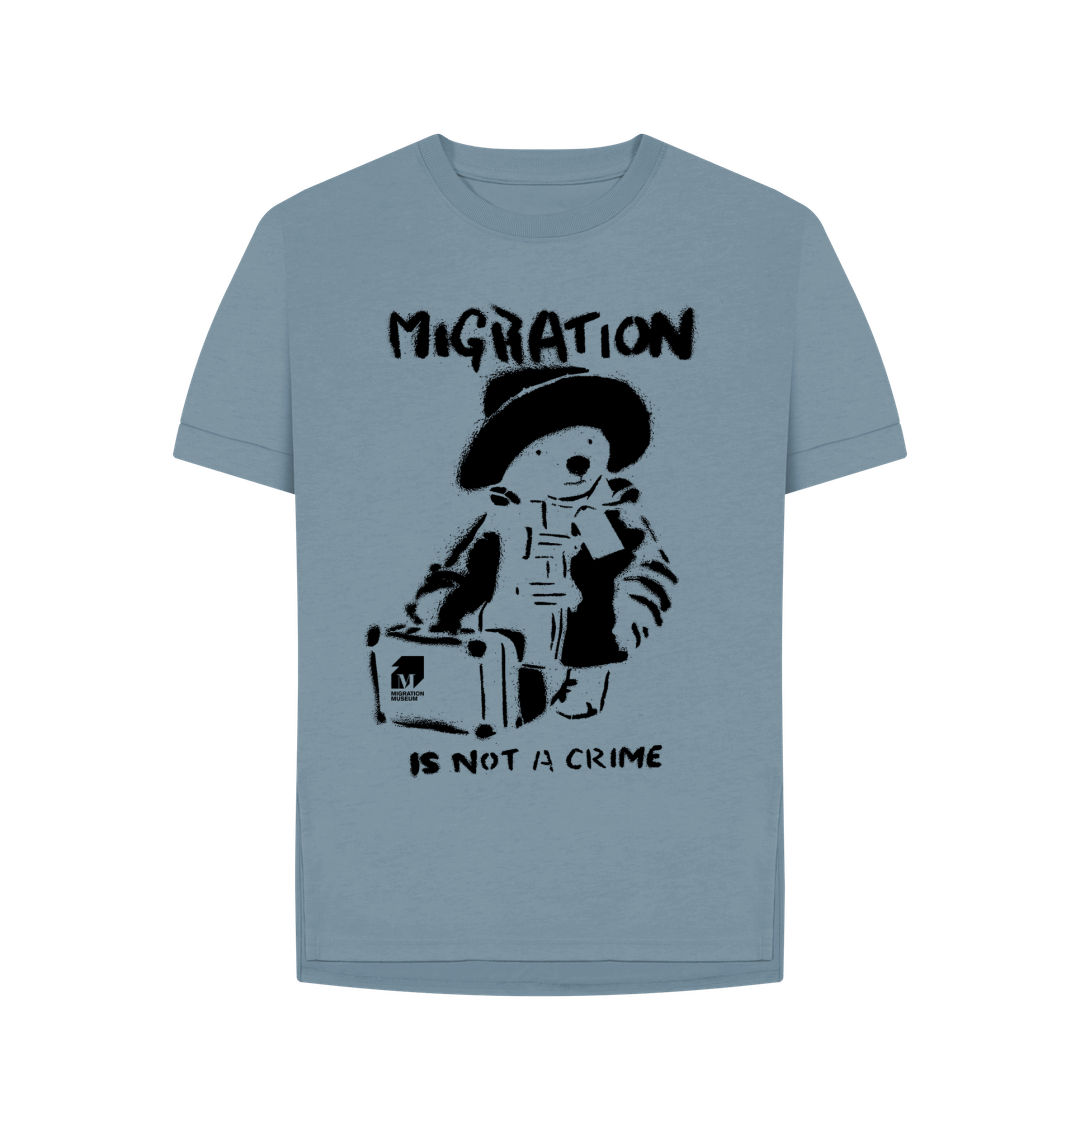 Migration Is Not A Crime - Organic Cotton Women's Relaxed Fit T-shirt. - Migration Museum Shop